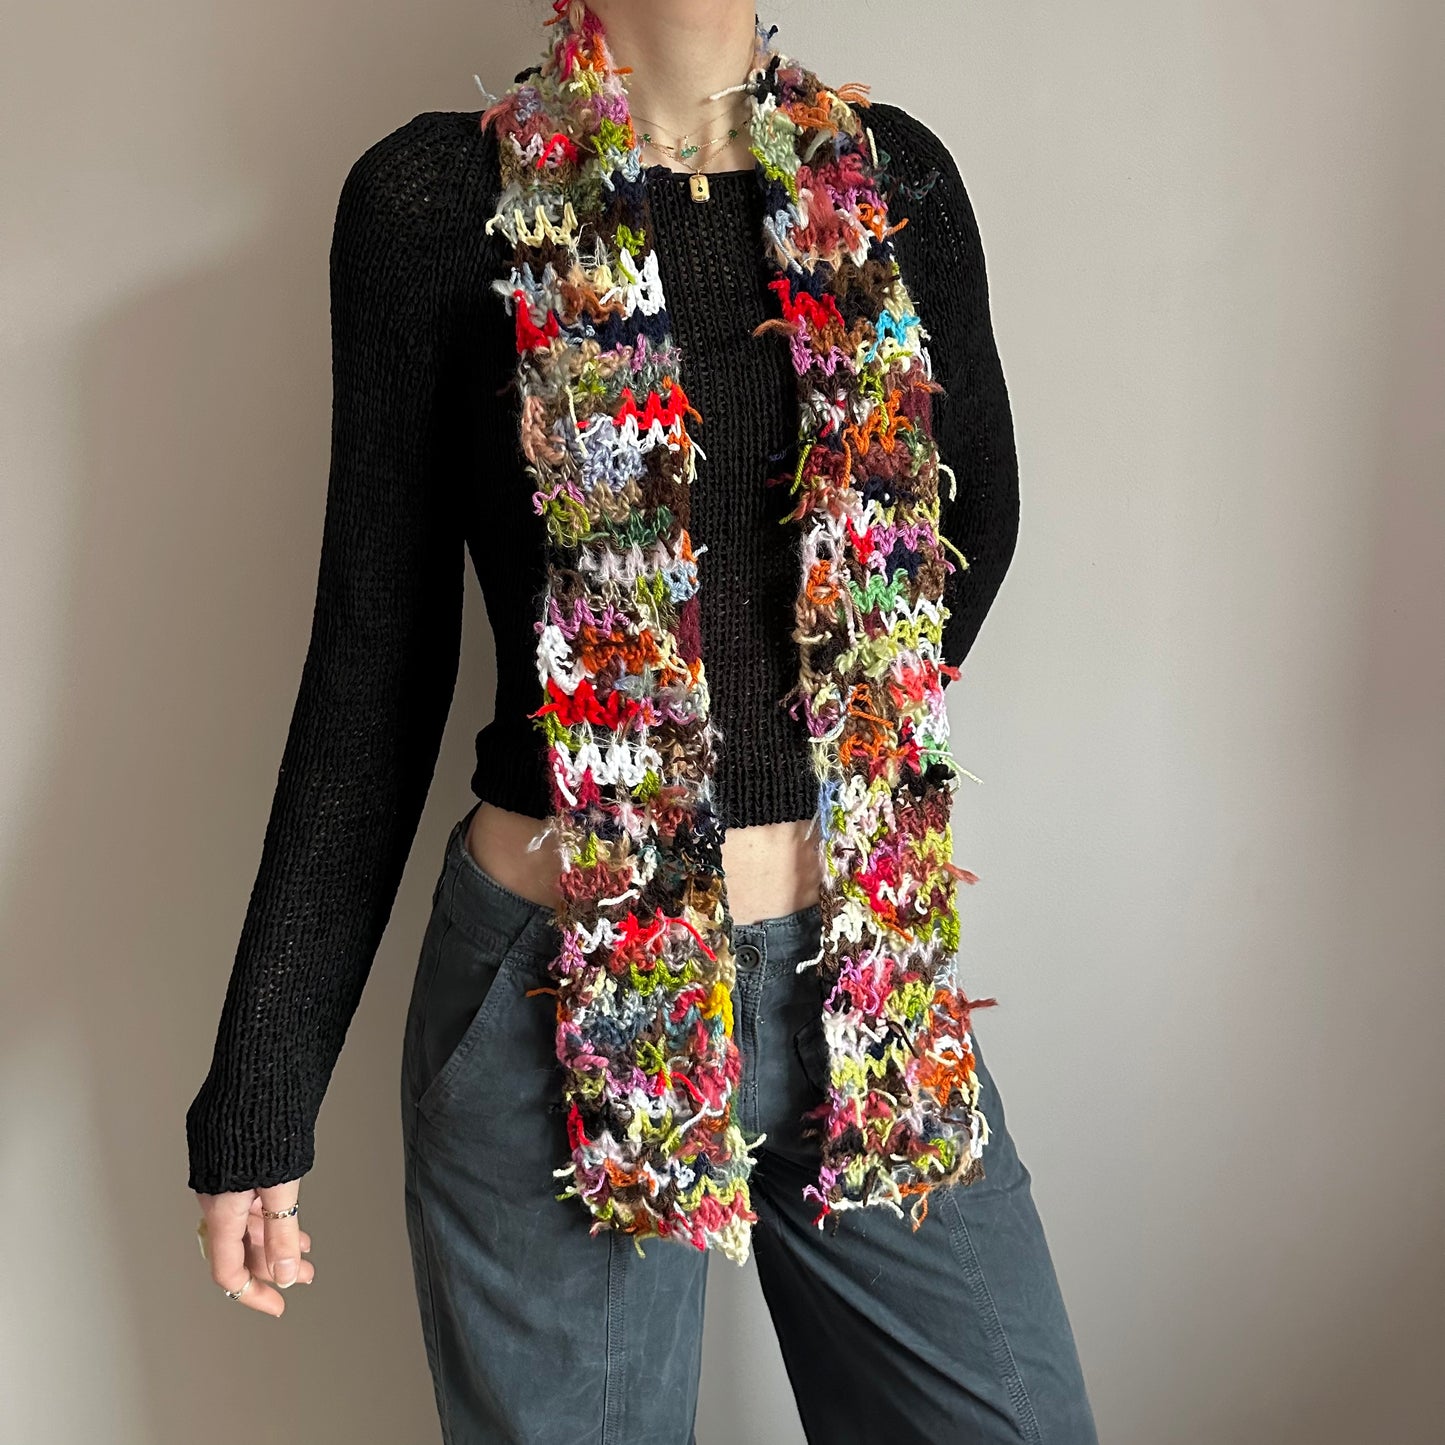 Scrappy skinny scarf #3 - handmade from leftover yarn scraps